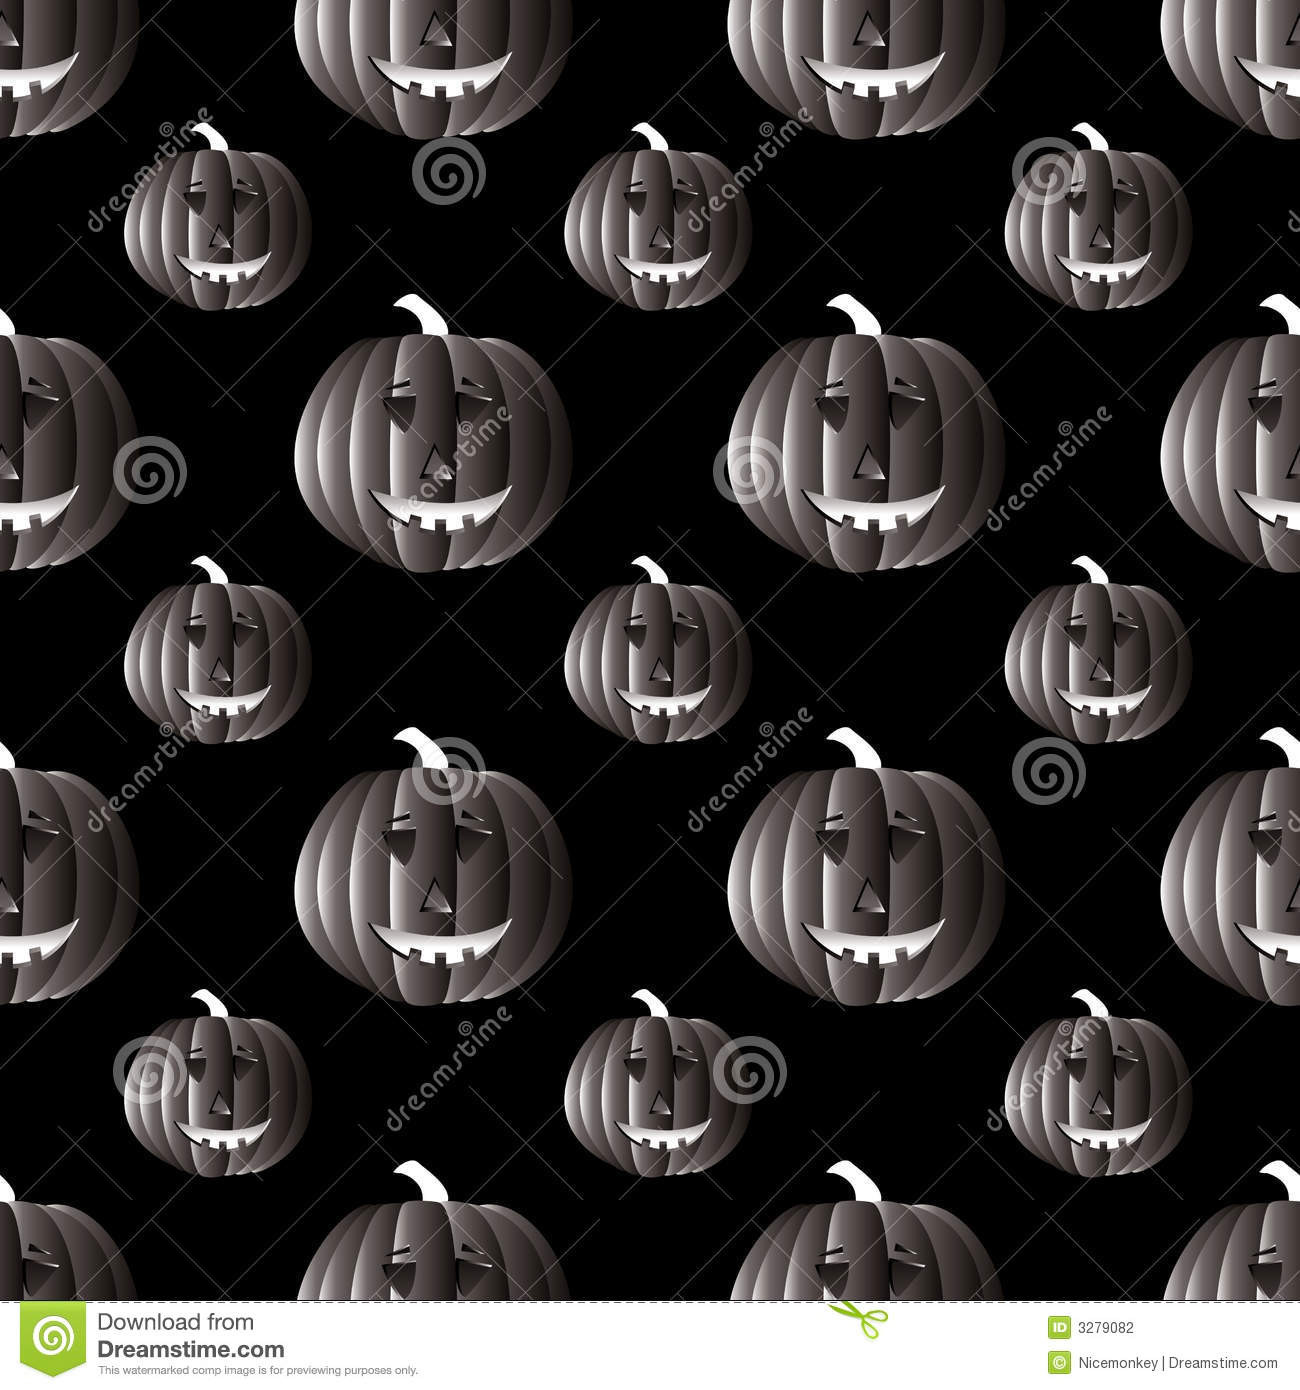 Halloween Tile Background
 Pumpkin Tile Stock graphy Image